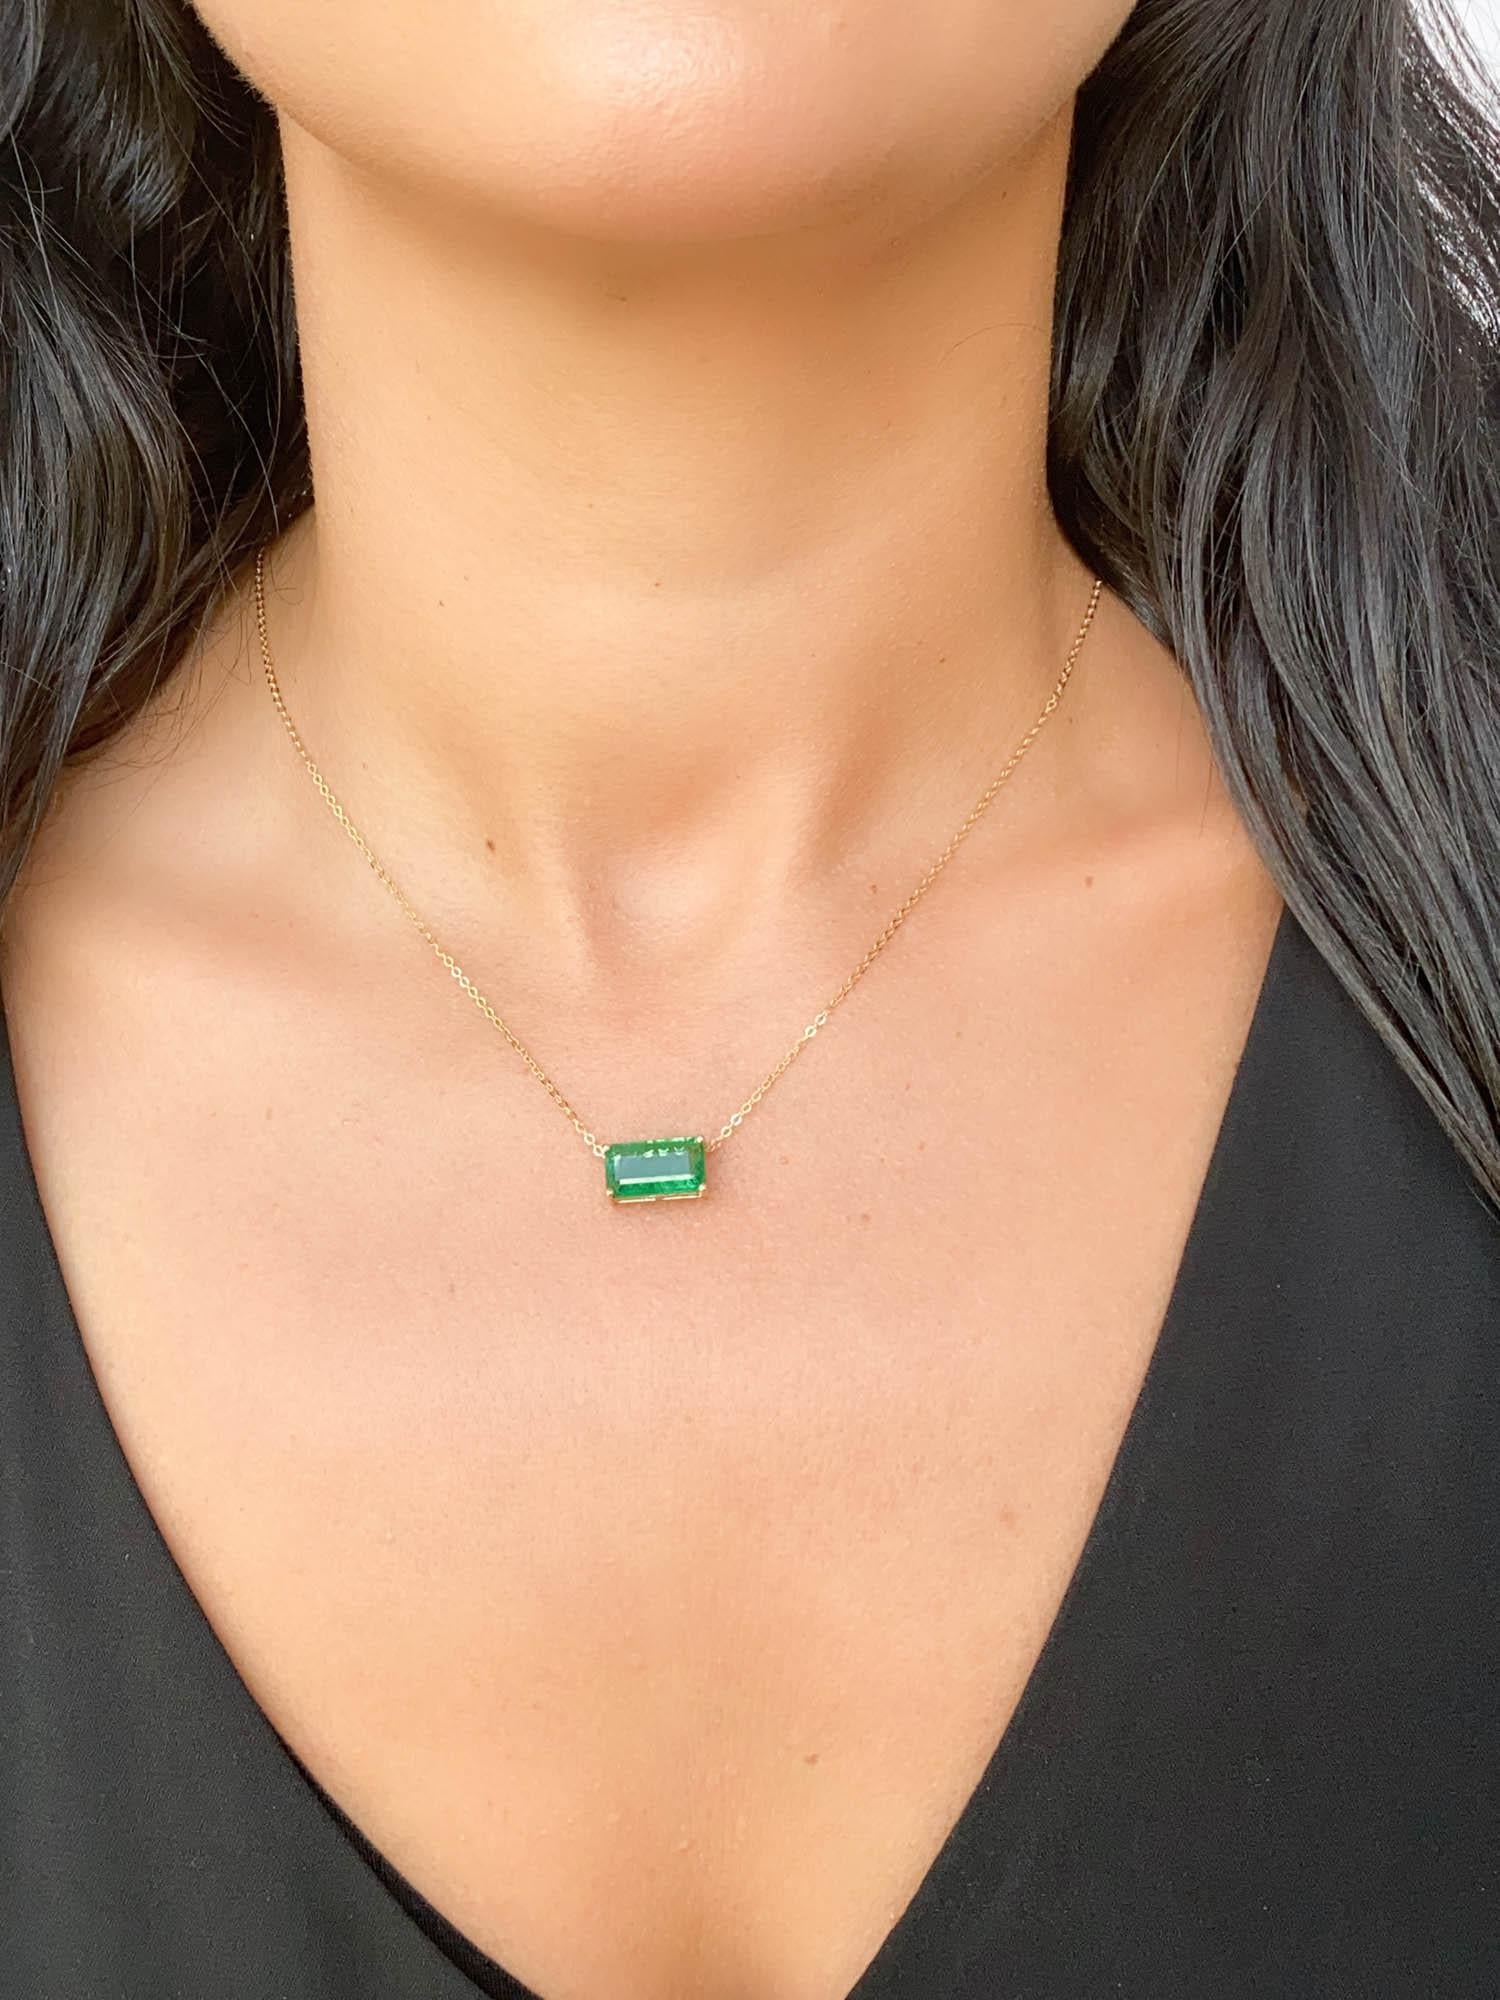 3.76ct Elongated Emerald Pendant Necklace 14K Gold Wear Multiple Ways R4471 For Sale 2